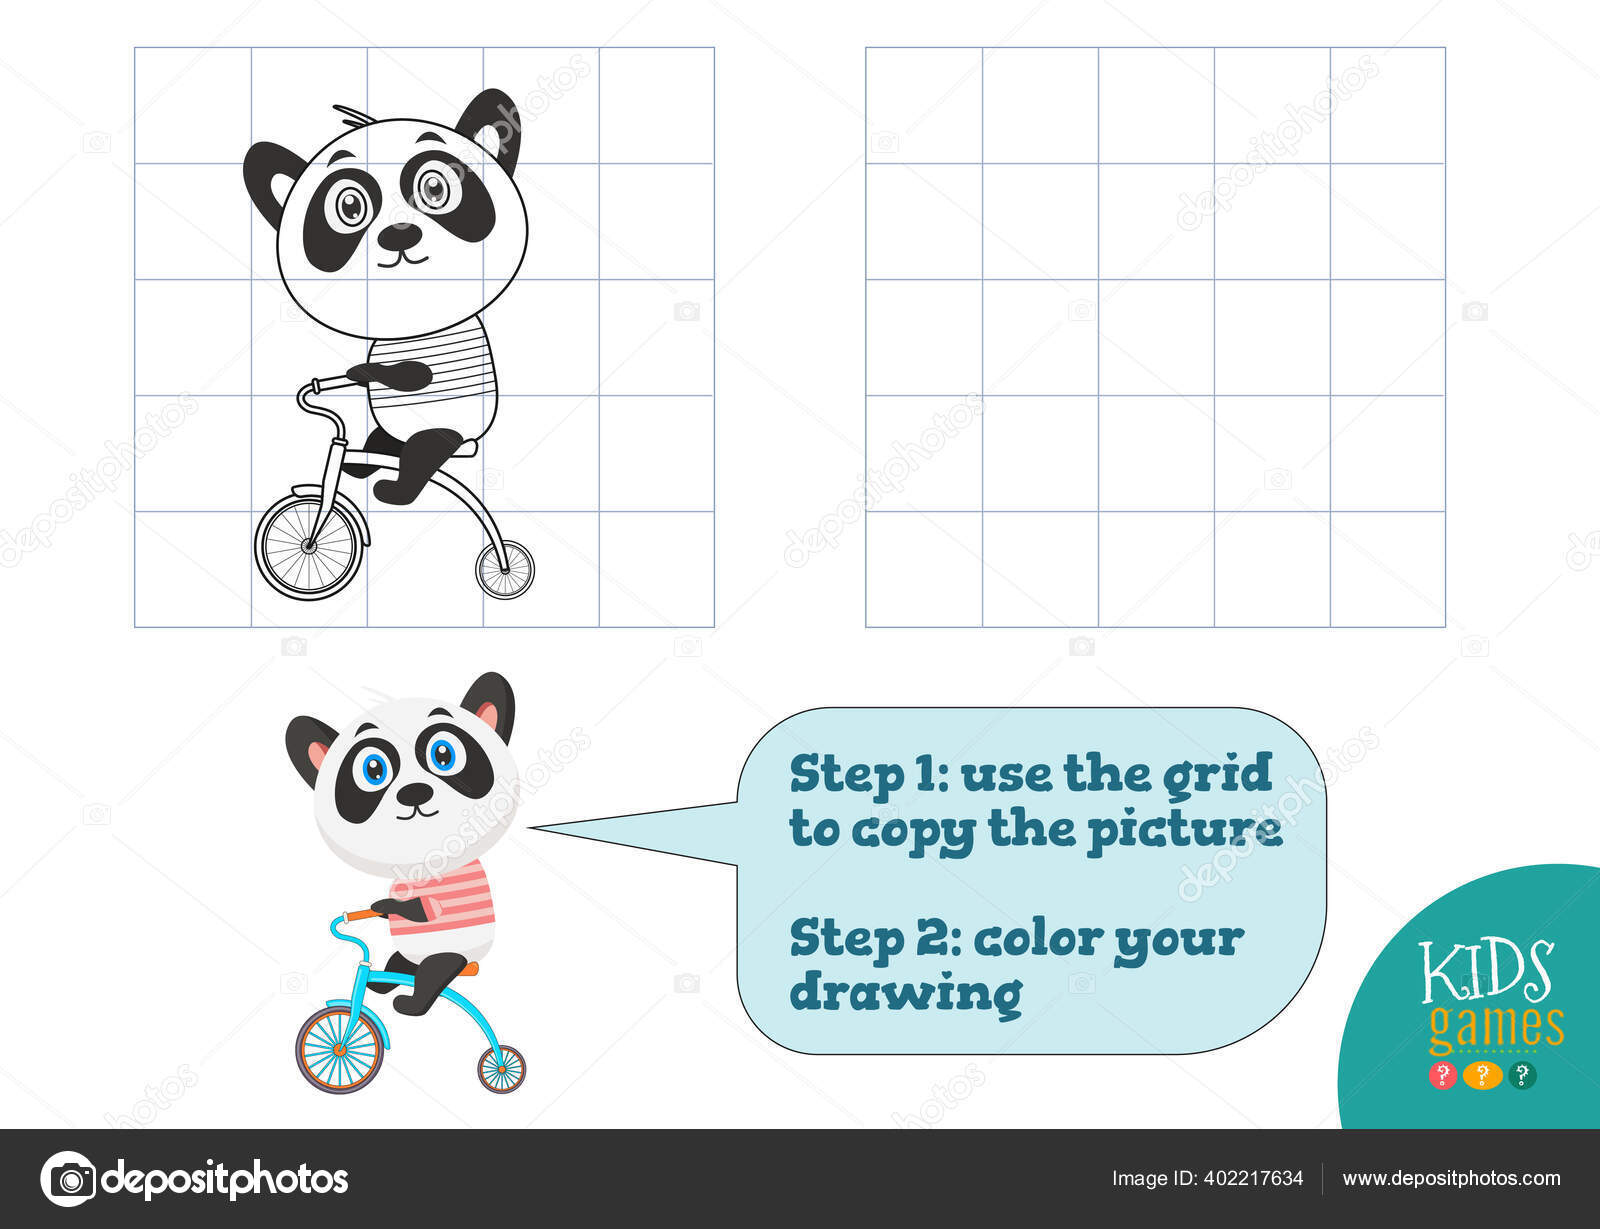 Colorir o jogo educacional panda bonito dos desenhos animados para